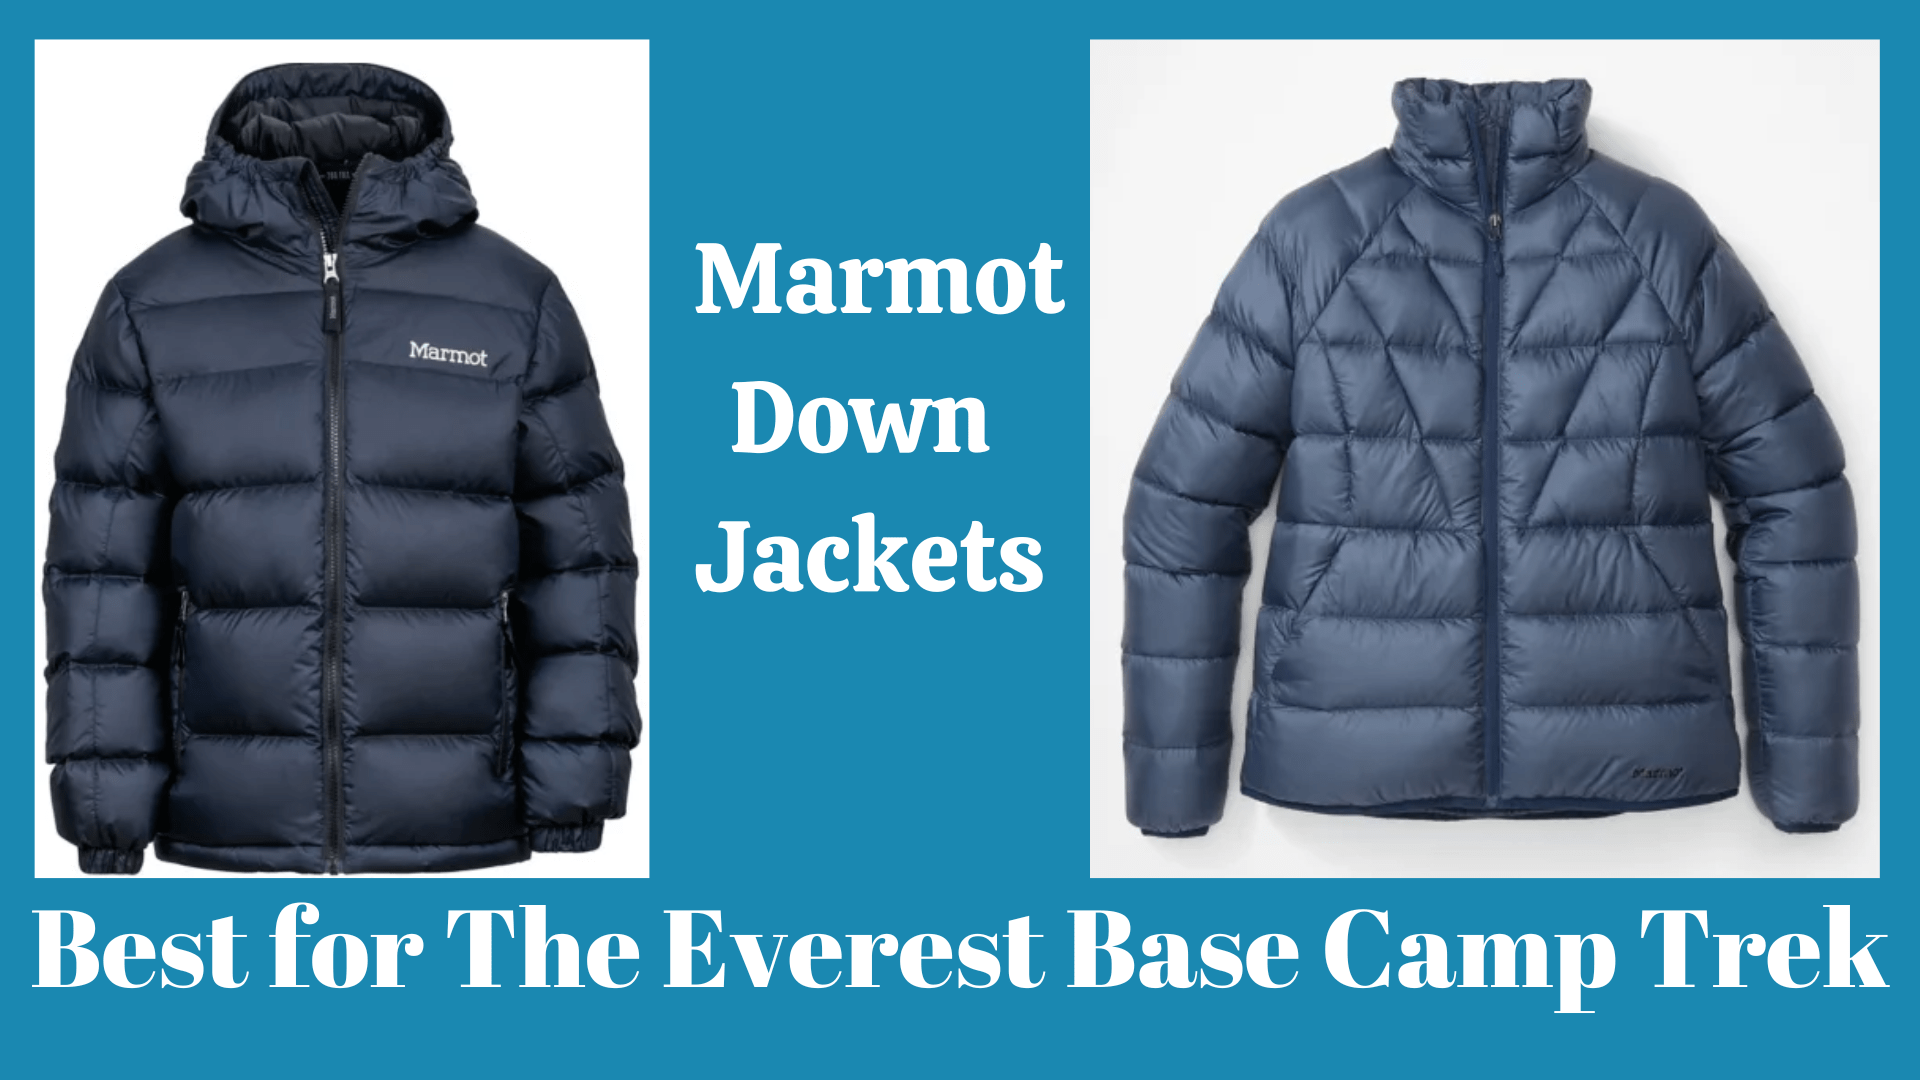 everest base camp trek down jacket